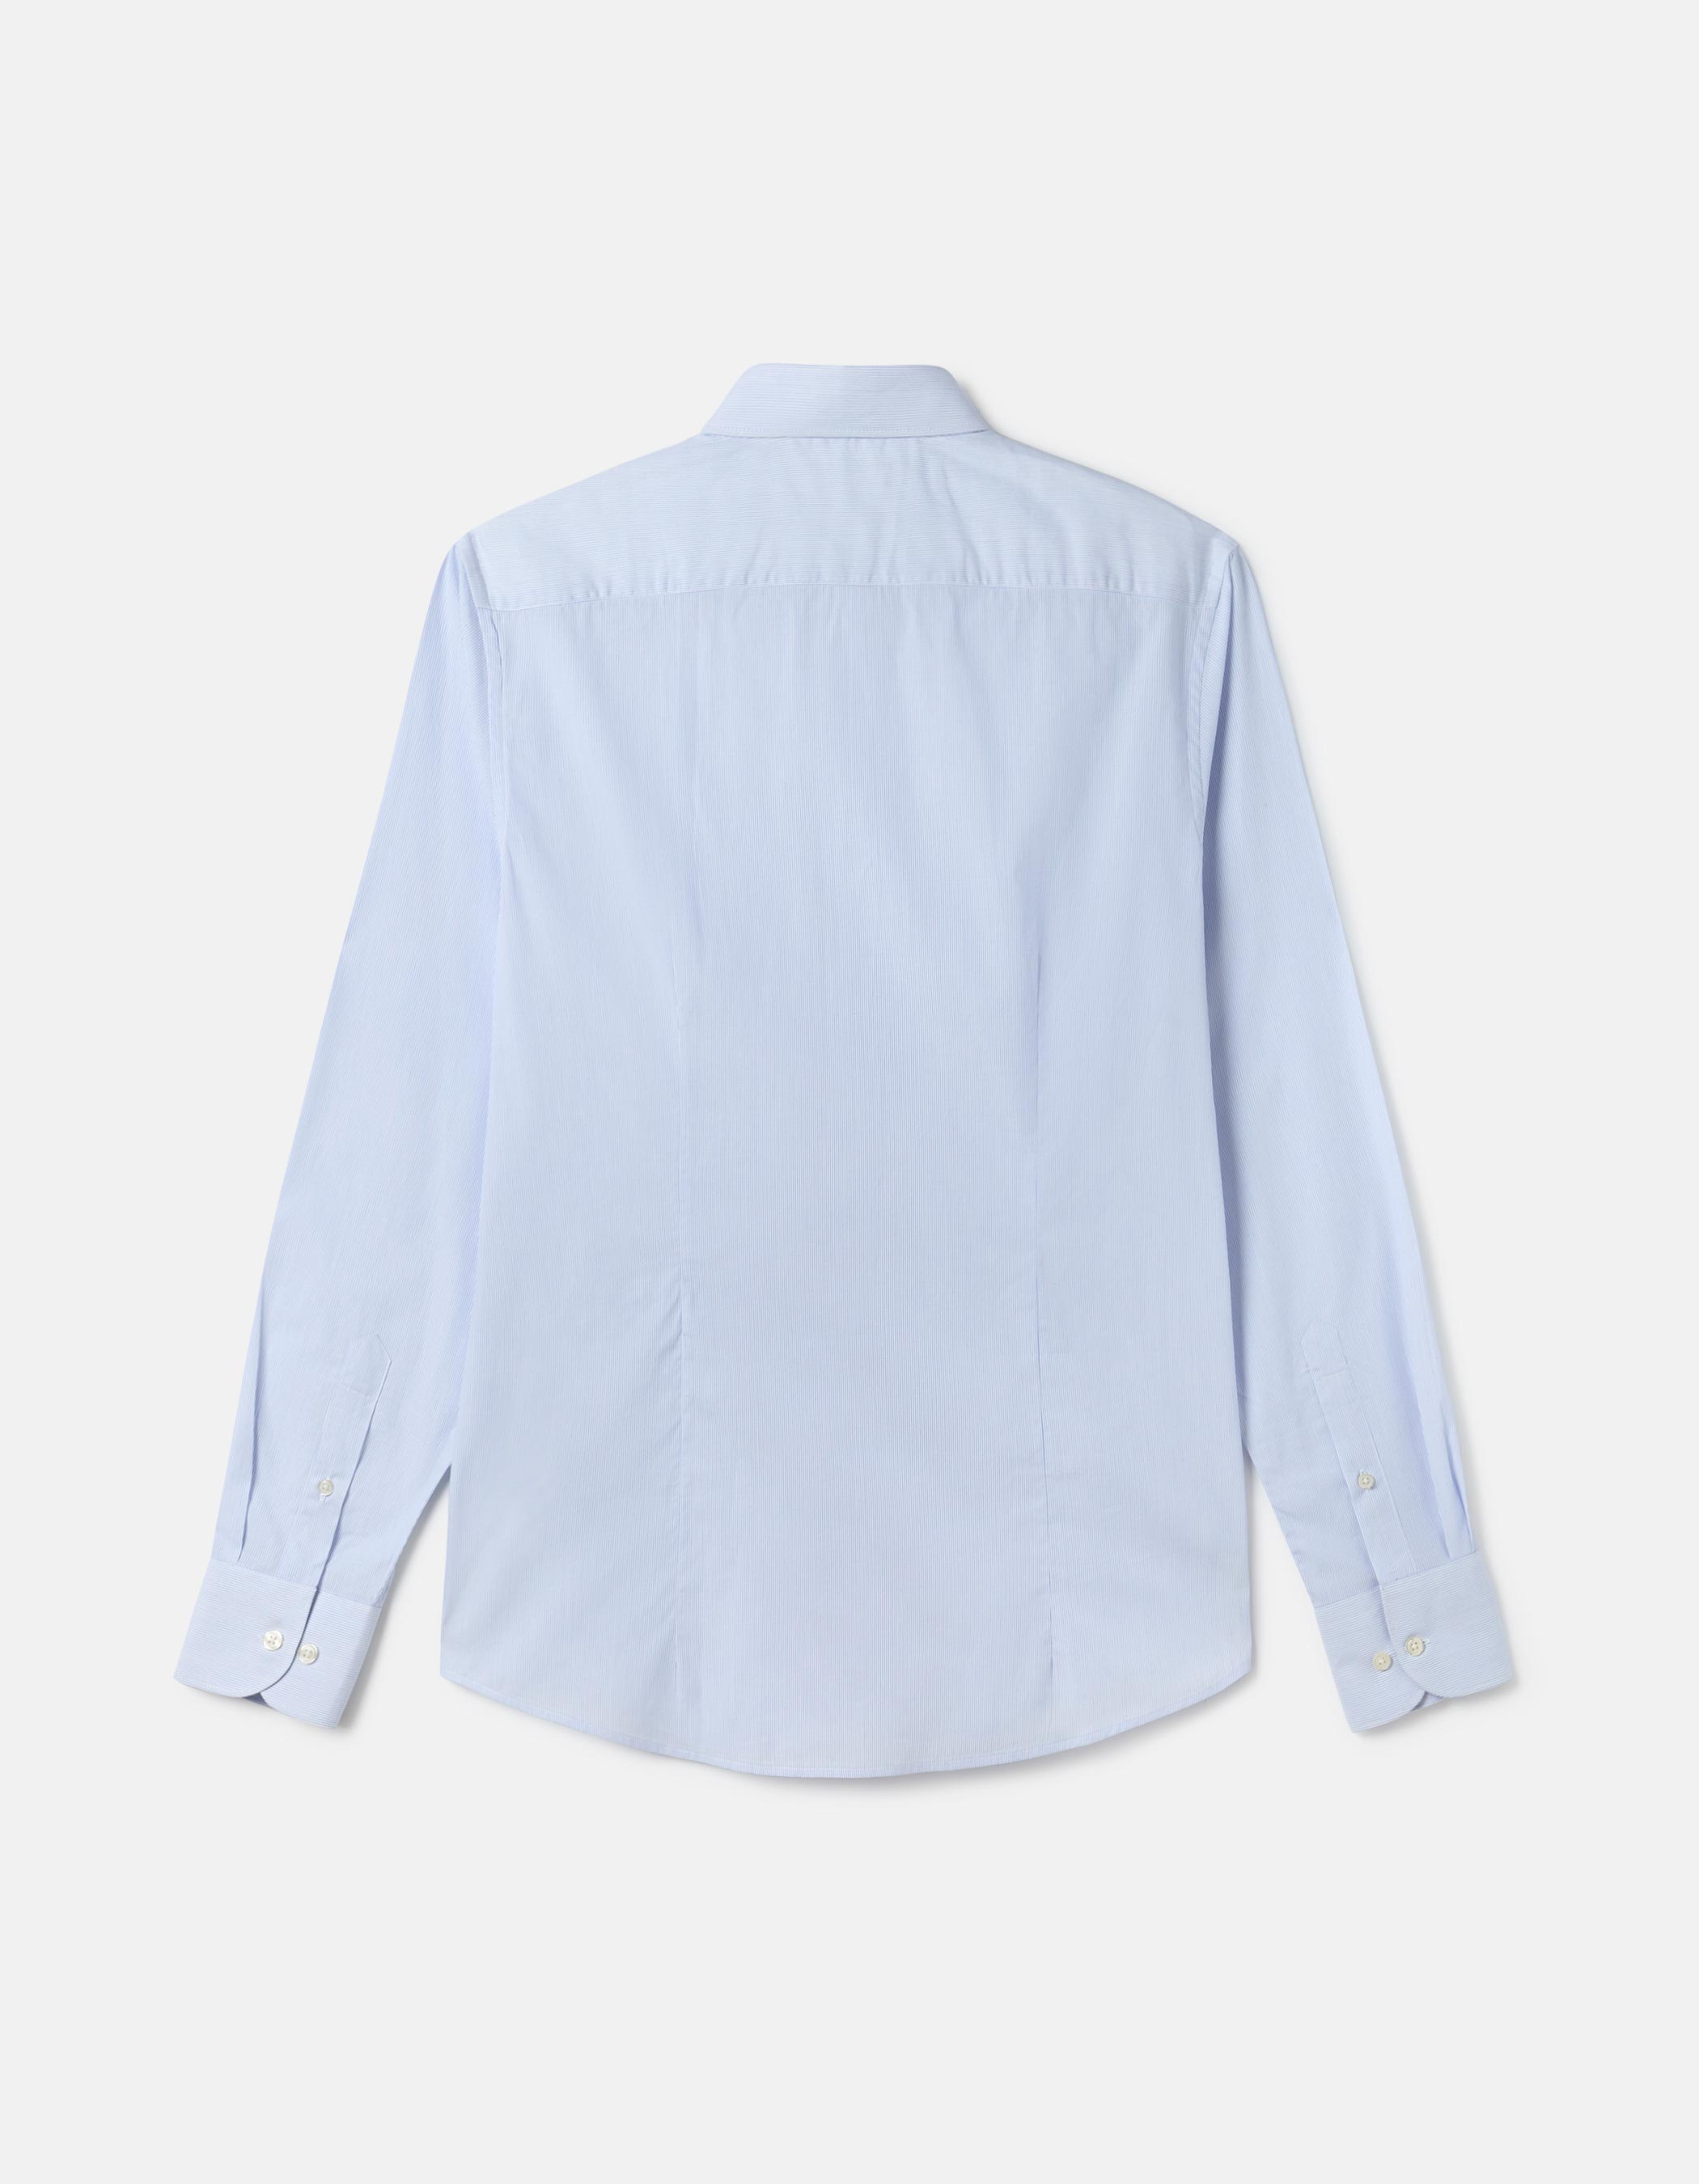 Camisa blanca amb ratlles blaves 2